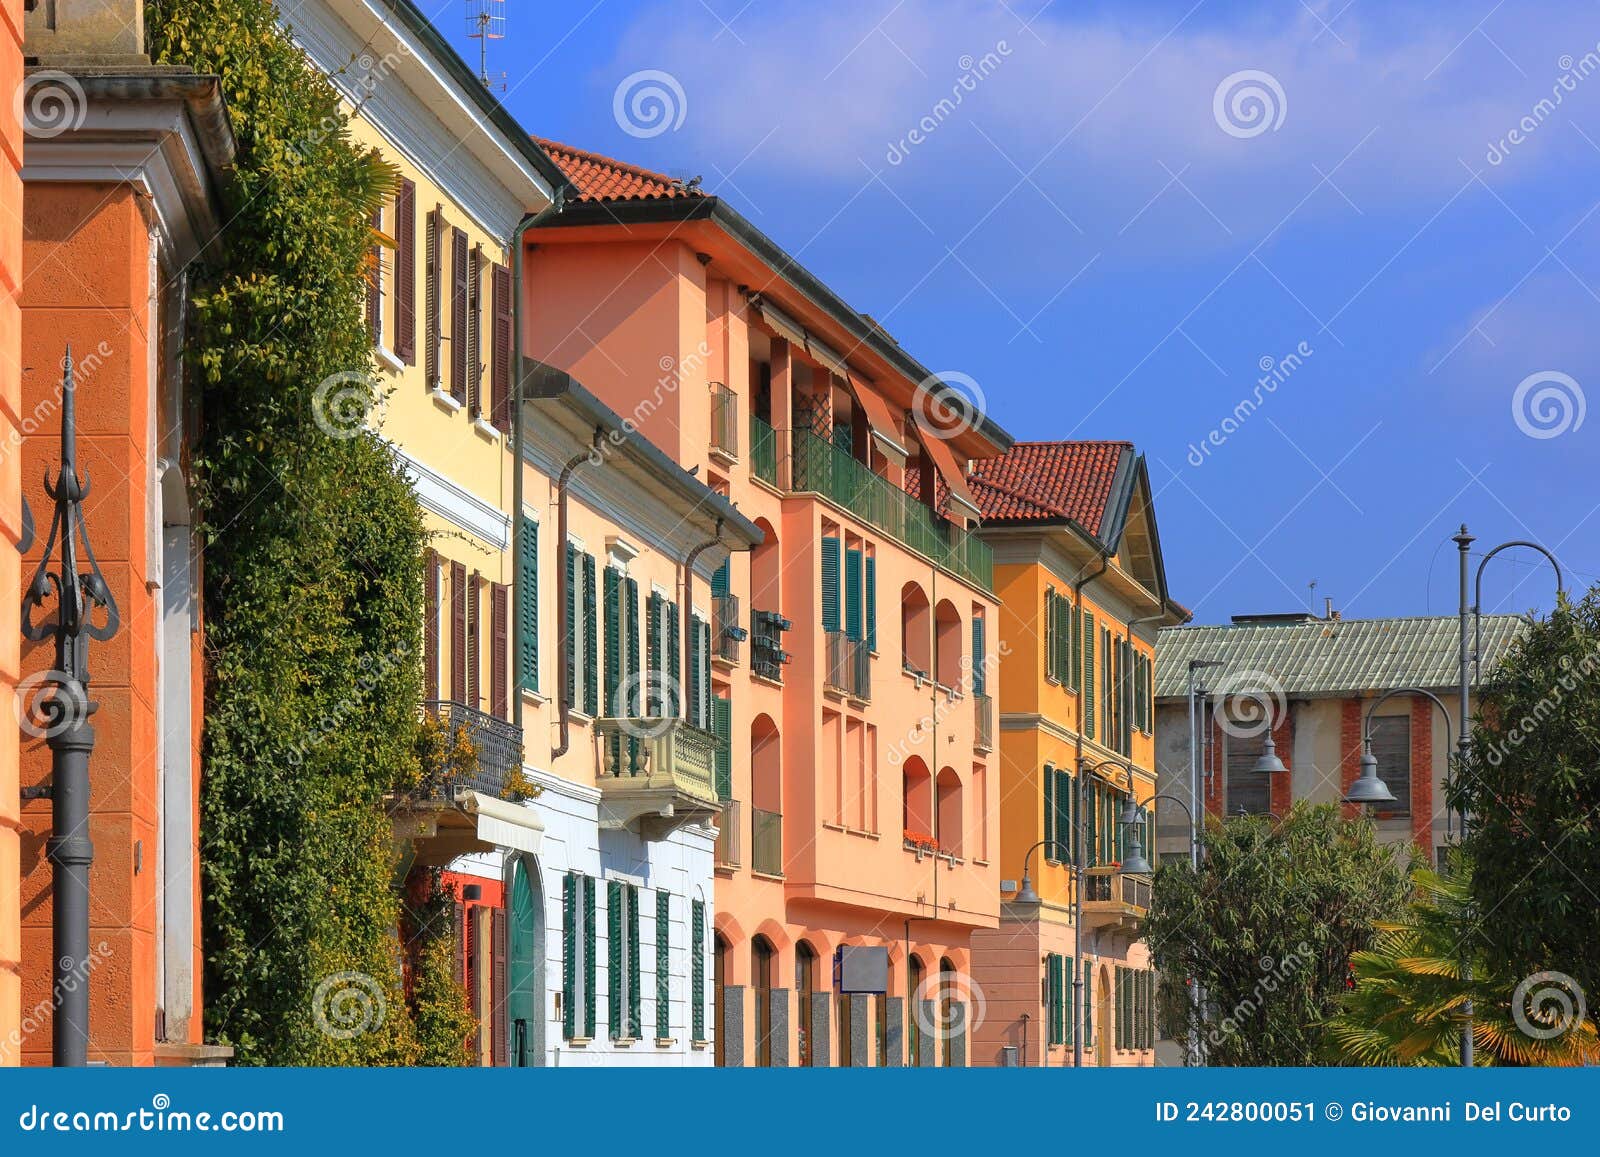 palazzi storici colorati di angera, italia, historical colorful buildings of angera, italy